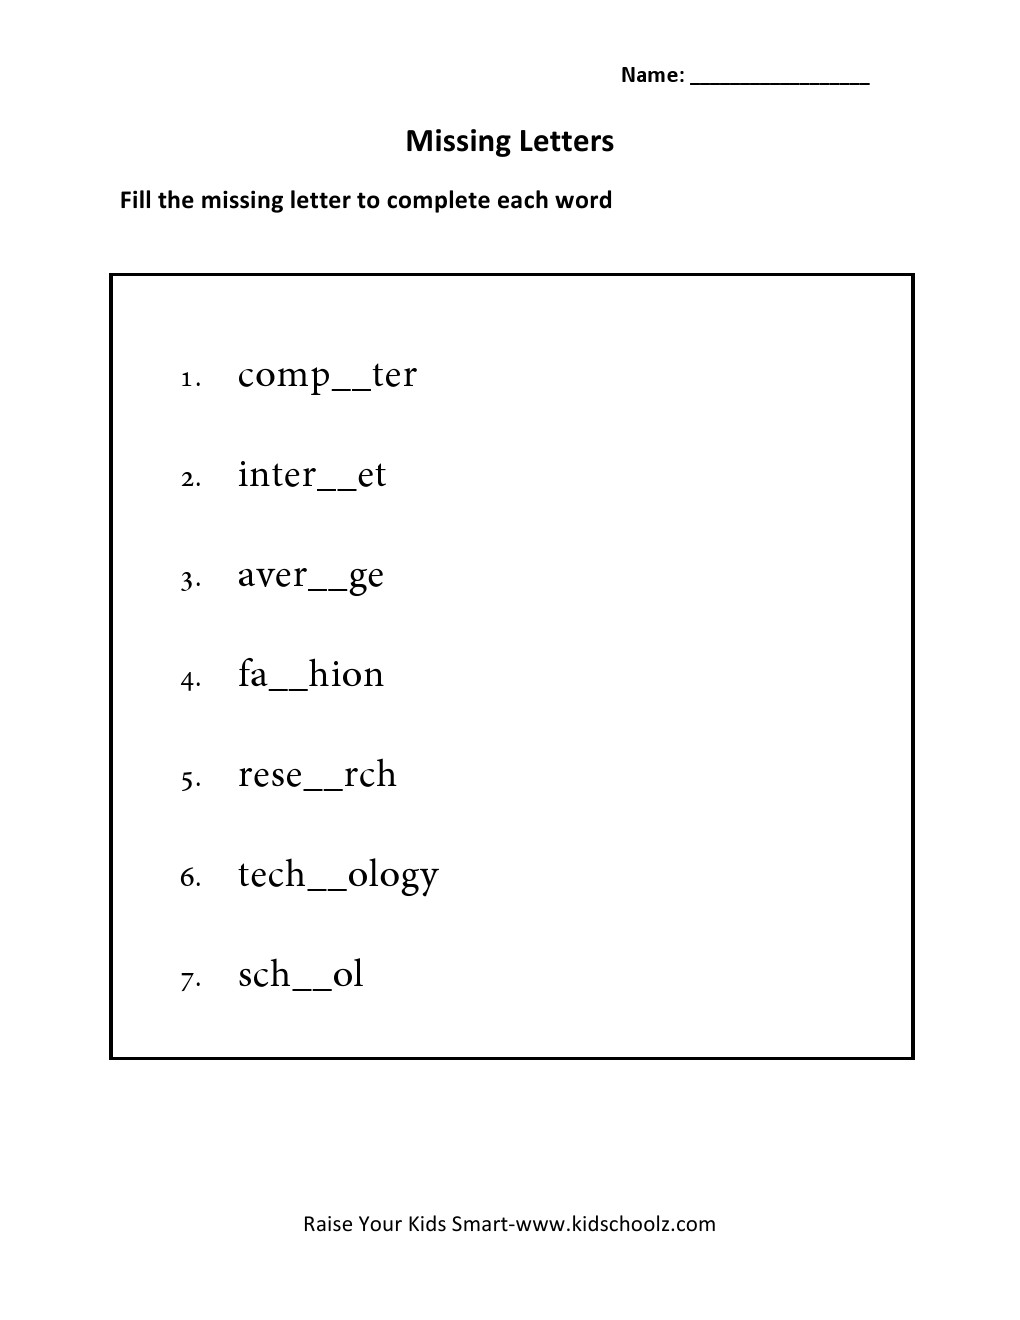 Grade 4 - Missing Letters Worksheet